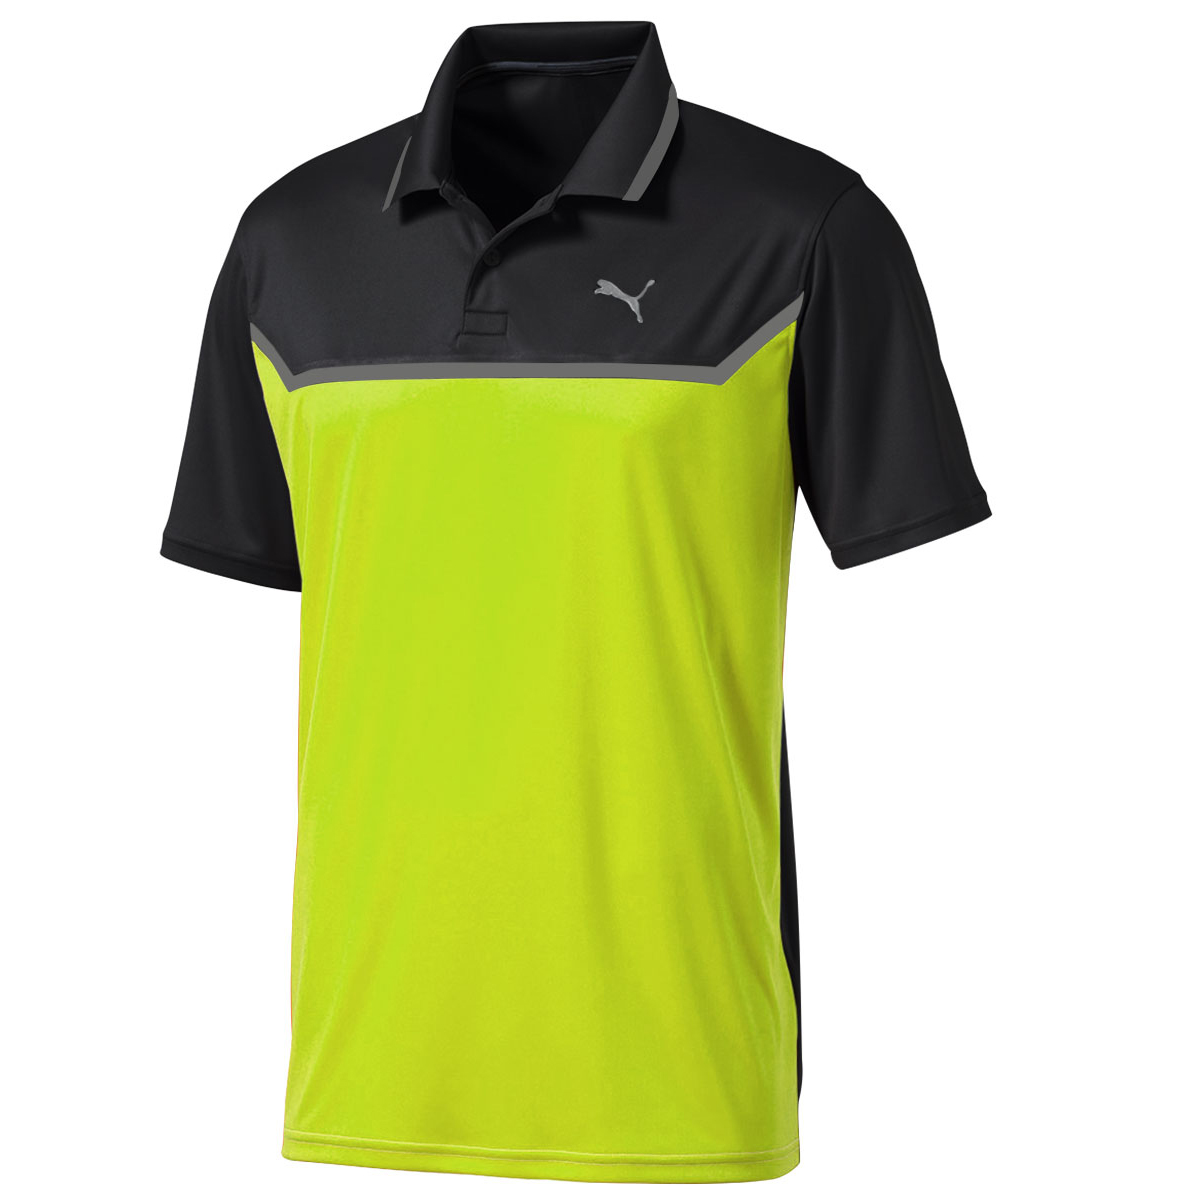 PUMA Golf Bonded Tech Polo Shirt from american golf